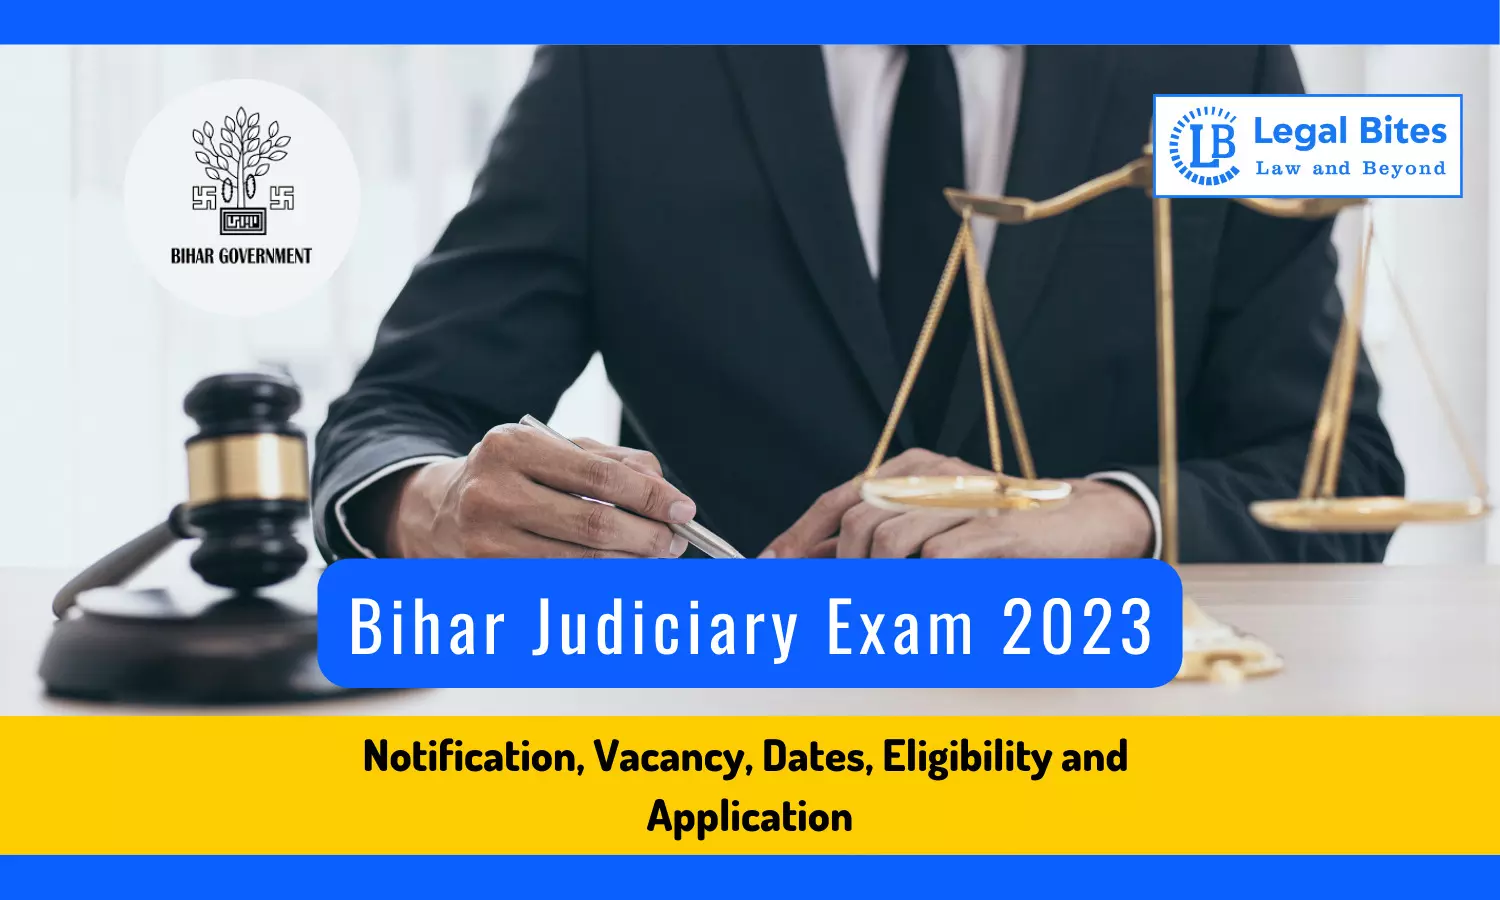 32nd Bihar Judiciary Exam 2023: Notification, Vacancy, Dates, Eligibility and Application